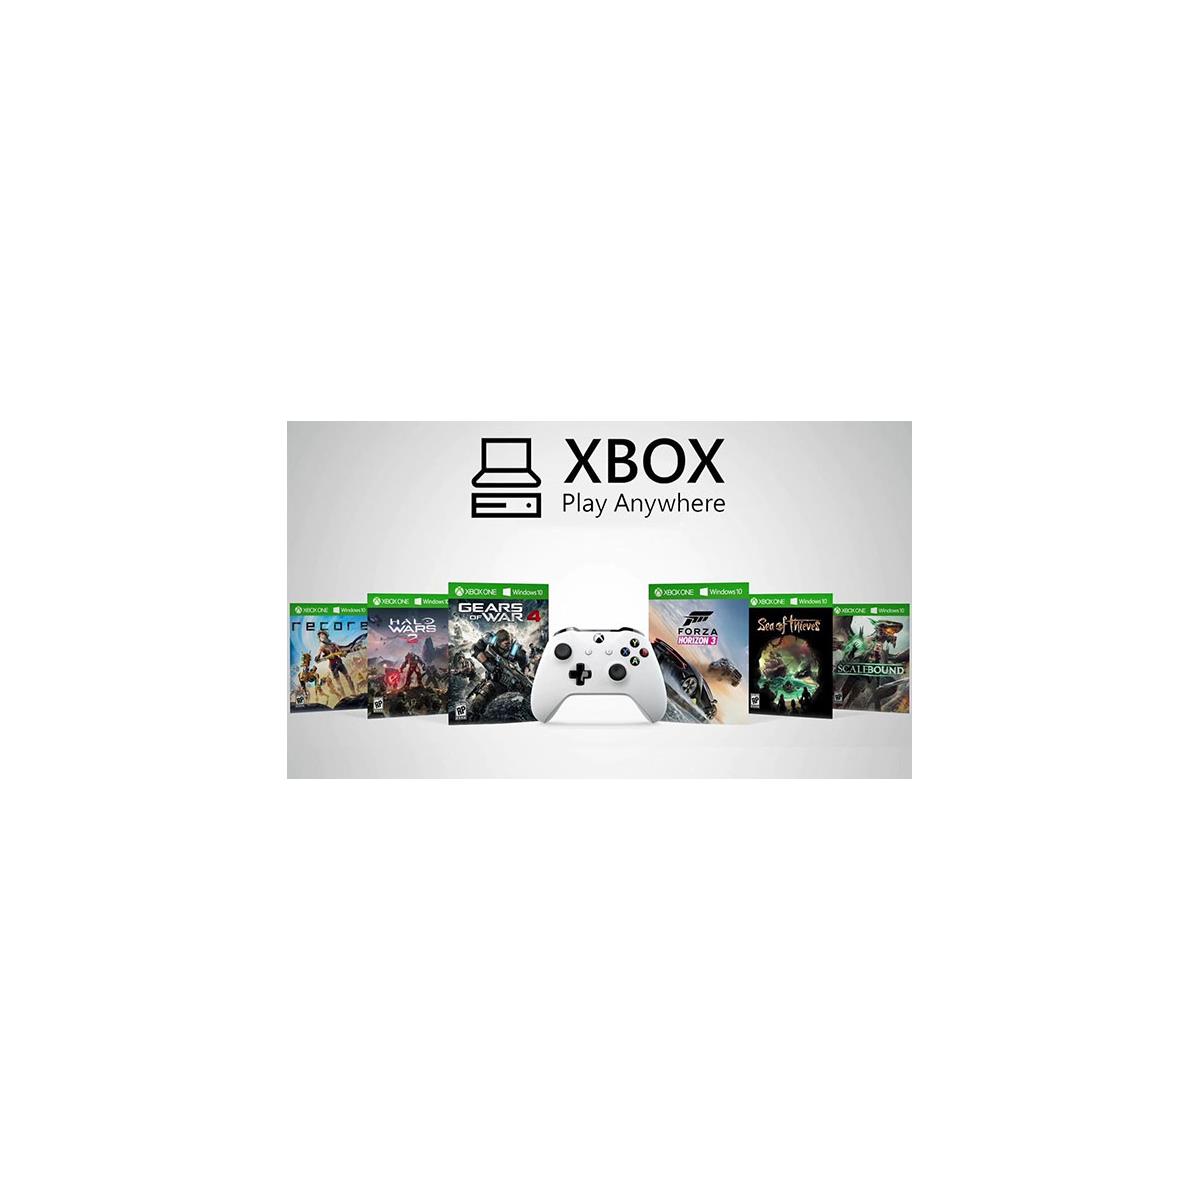 Ruwe olie opleggen toevoegen aan Microsoft Insists Play Anywhere Initiative For PC Wont Kill Xbox One Gaming  | HotHardware